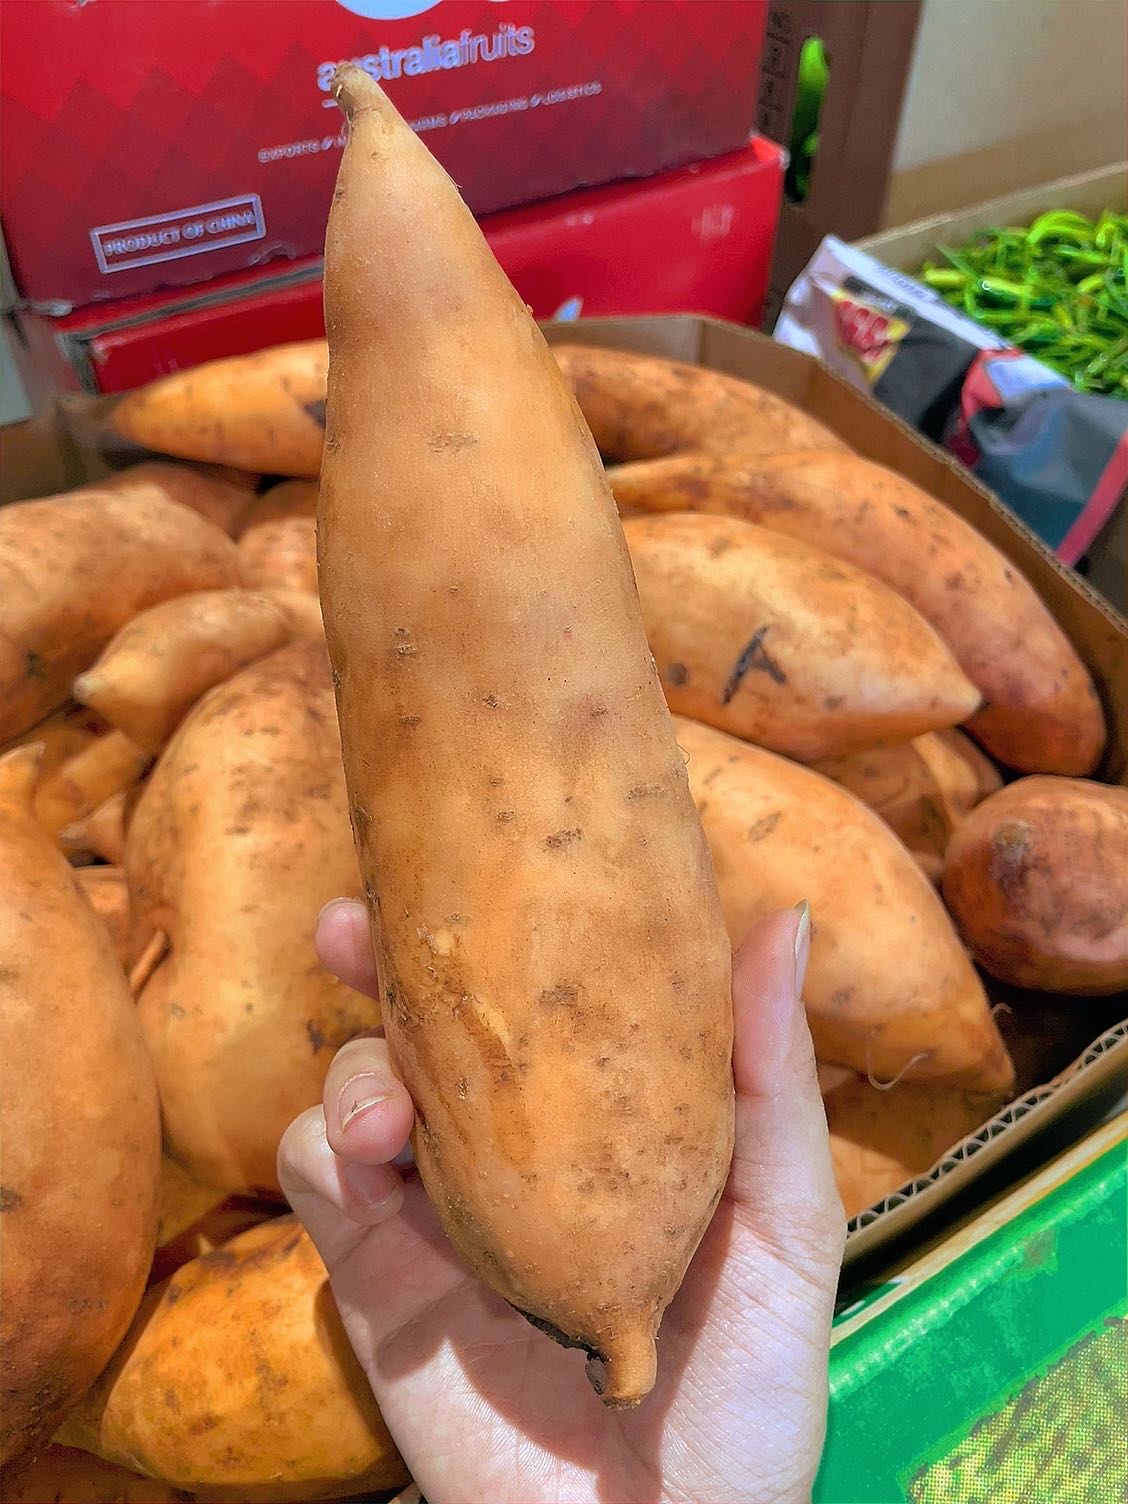 [Fresh]-Golden-Sweet-Potatoes-Approximately-1kg-1